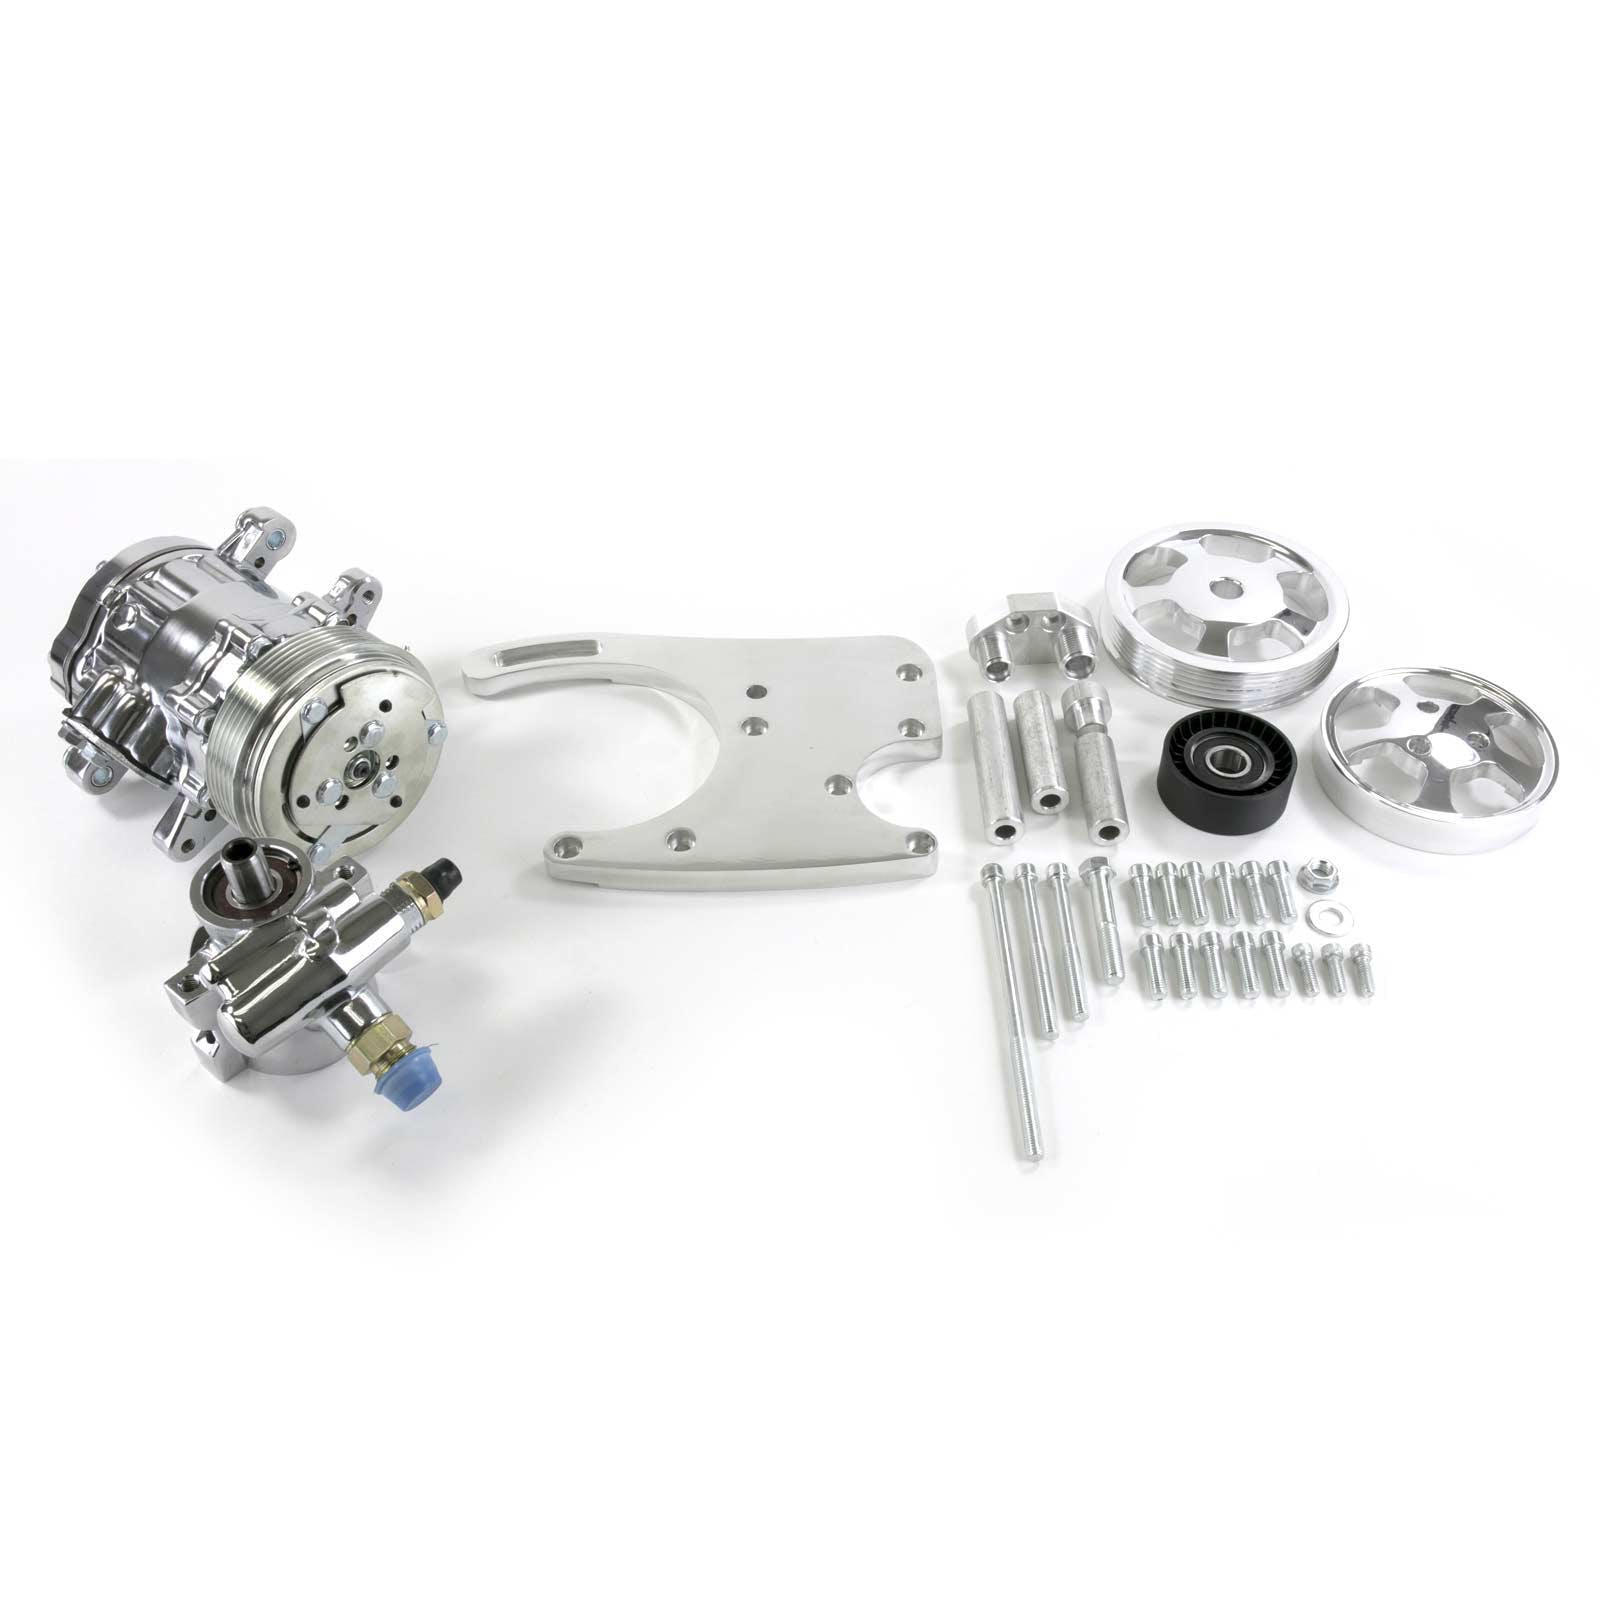 Top Street Performance 84053P-KT Aluminum Hydraulic Power Steering Kit, Polished